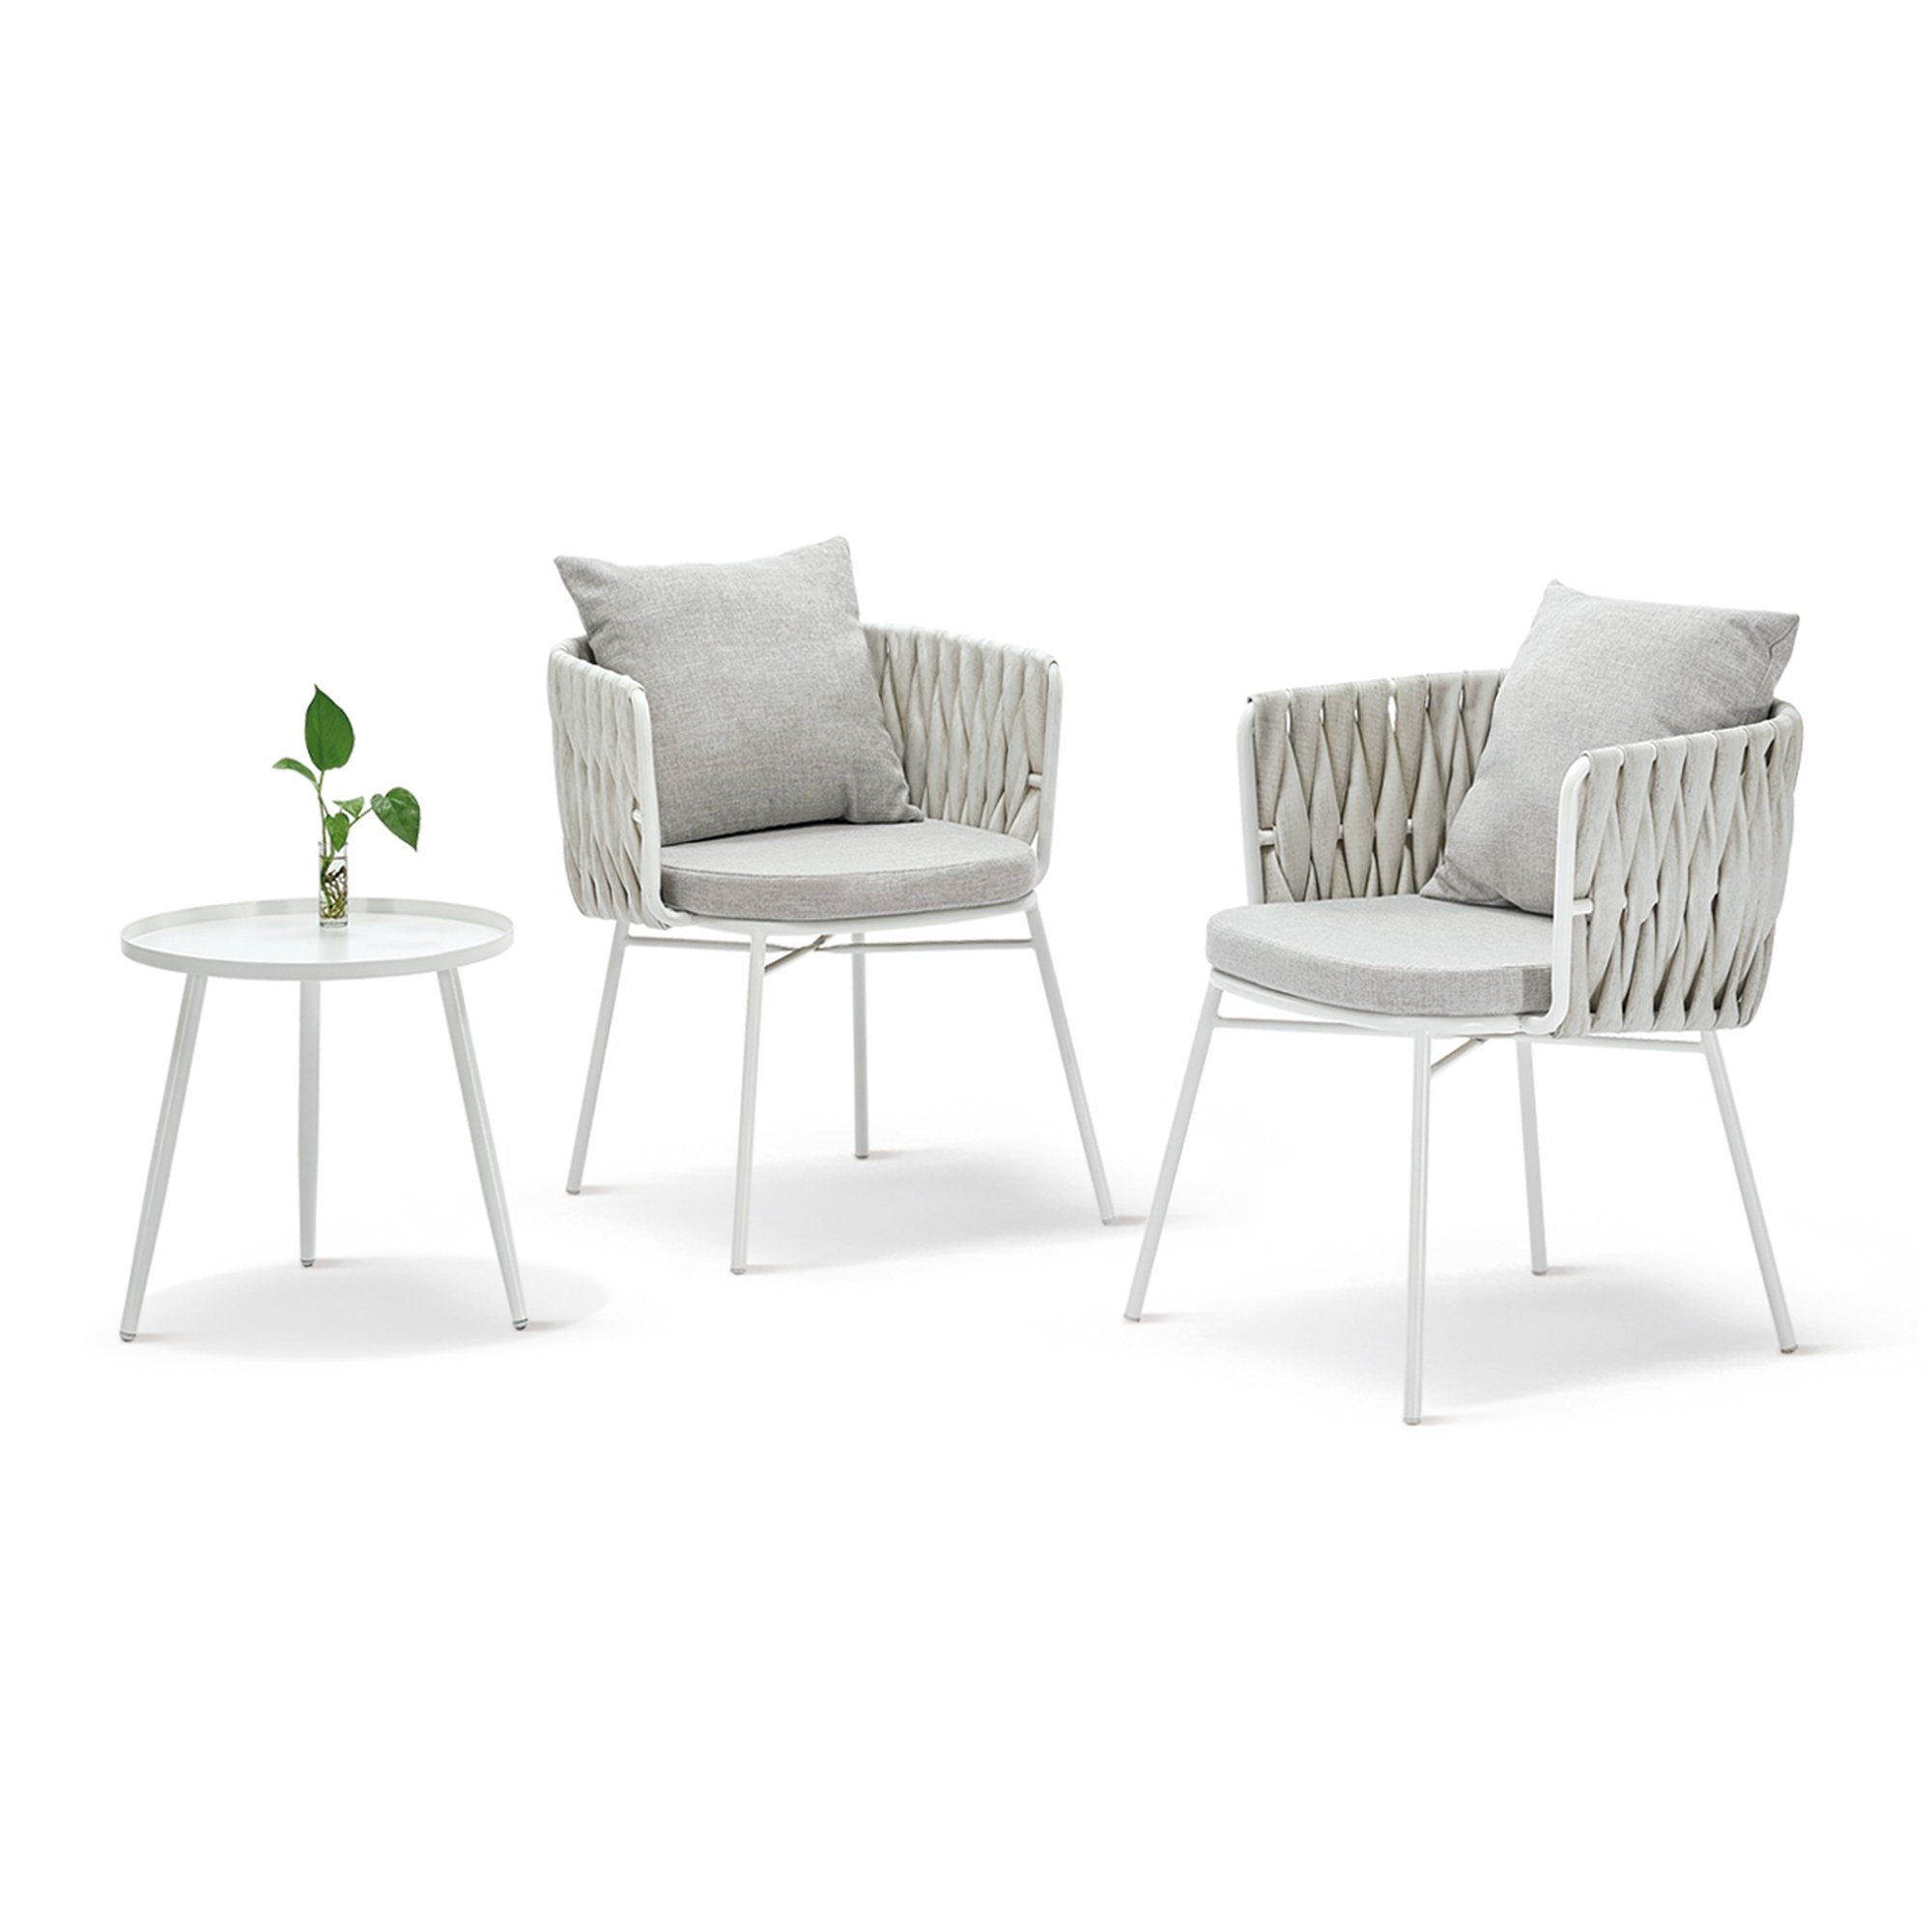 Outdoor Garden Sets Rattan Chairs Patio Furniture 3PCS